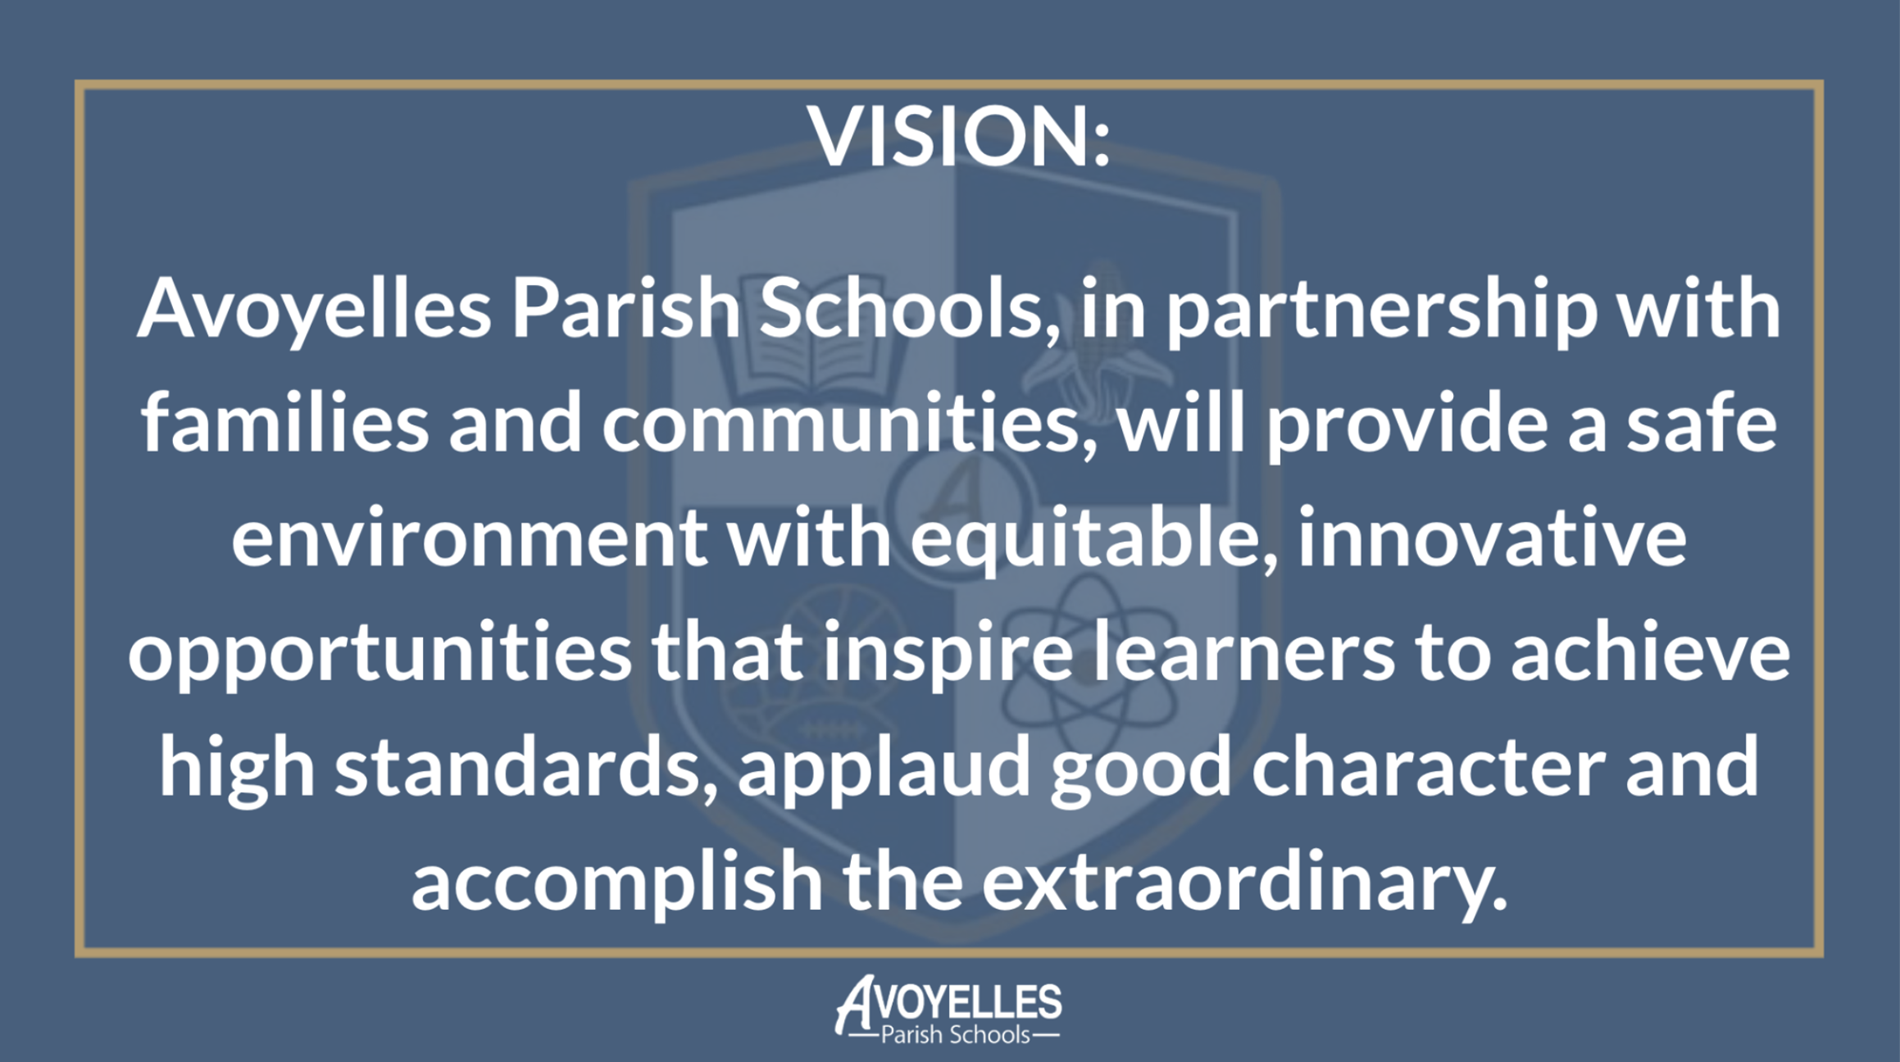 Avoyelles Parish Schools Vision Statement